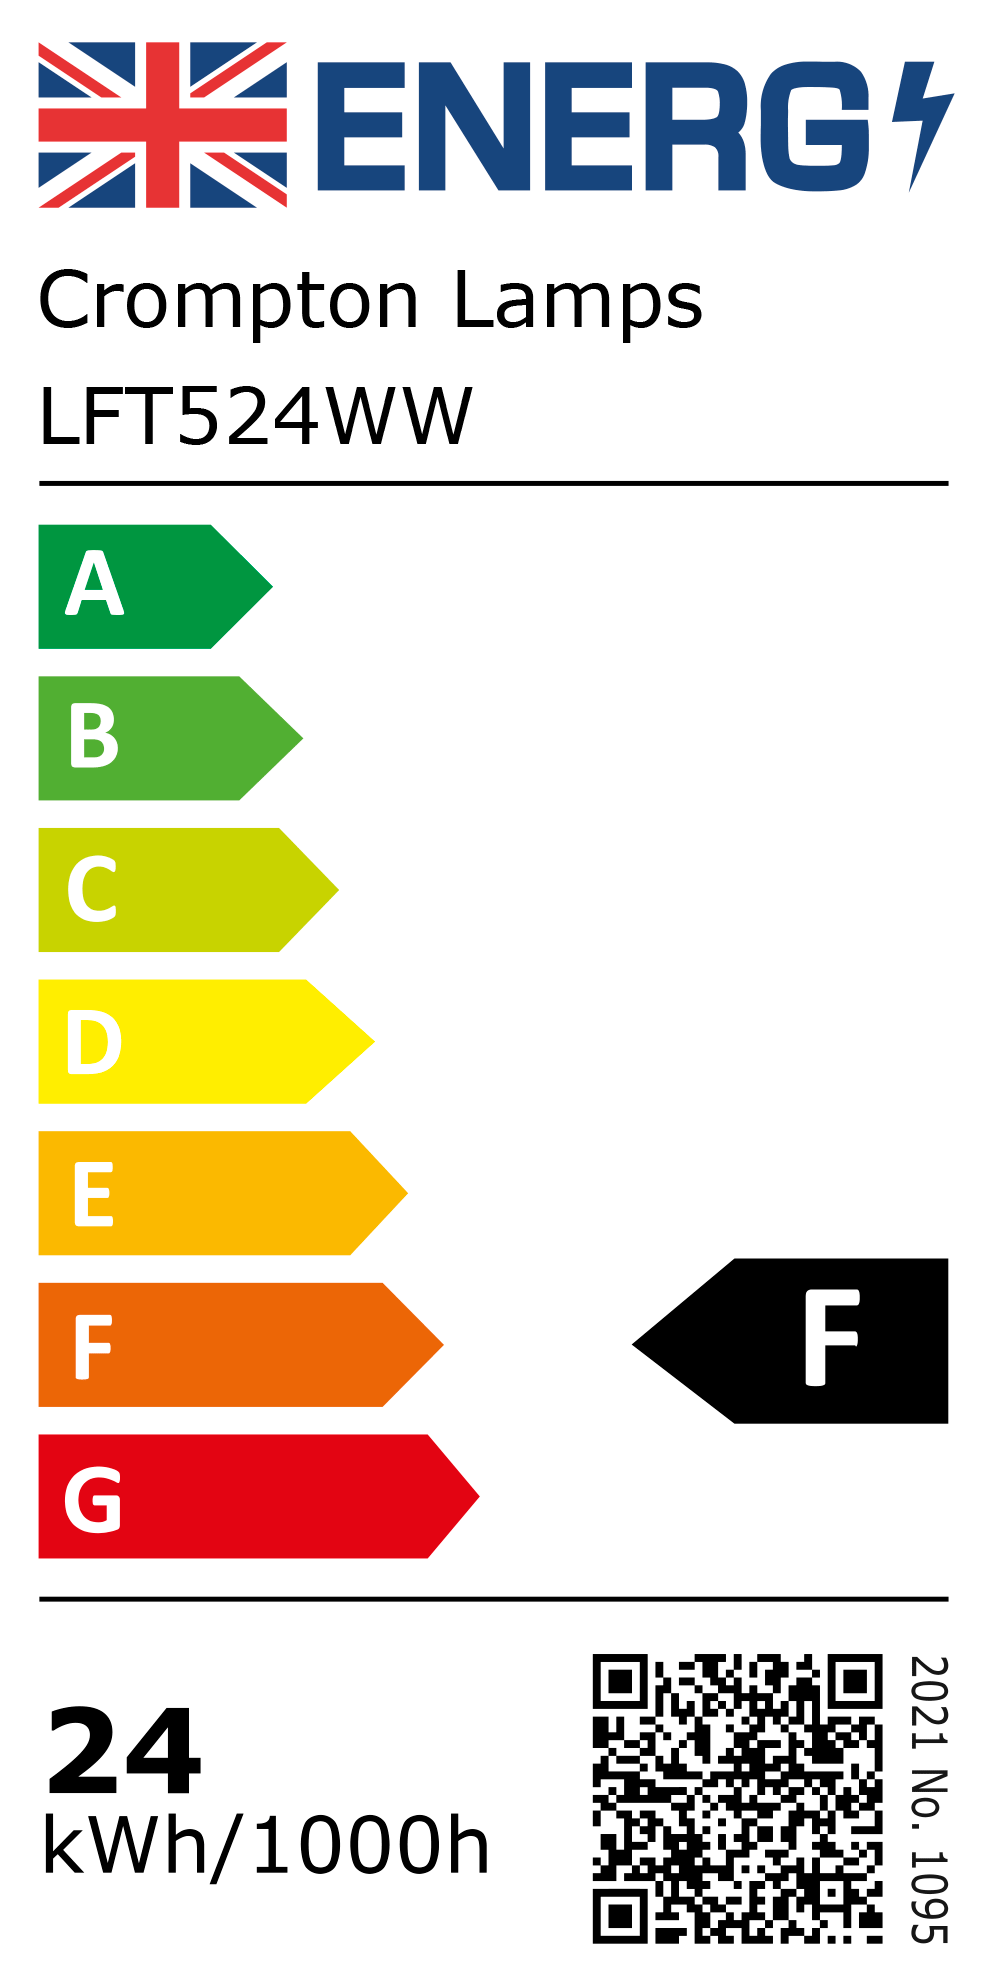 New 2021 Energy Rating Label: Stock Code LFT524WW